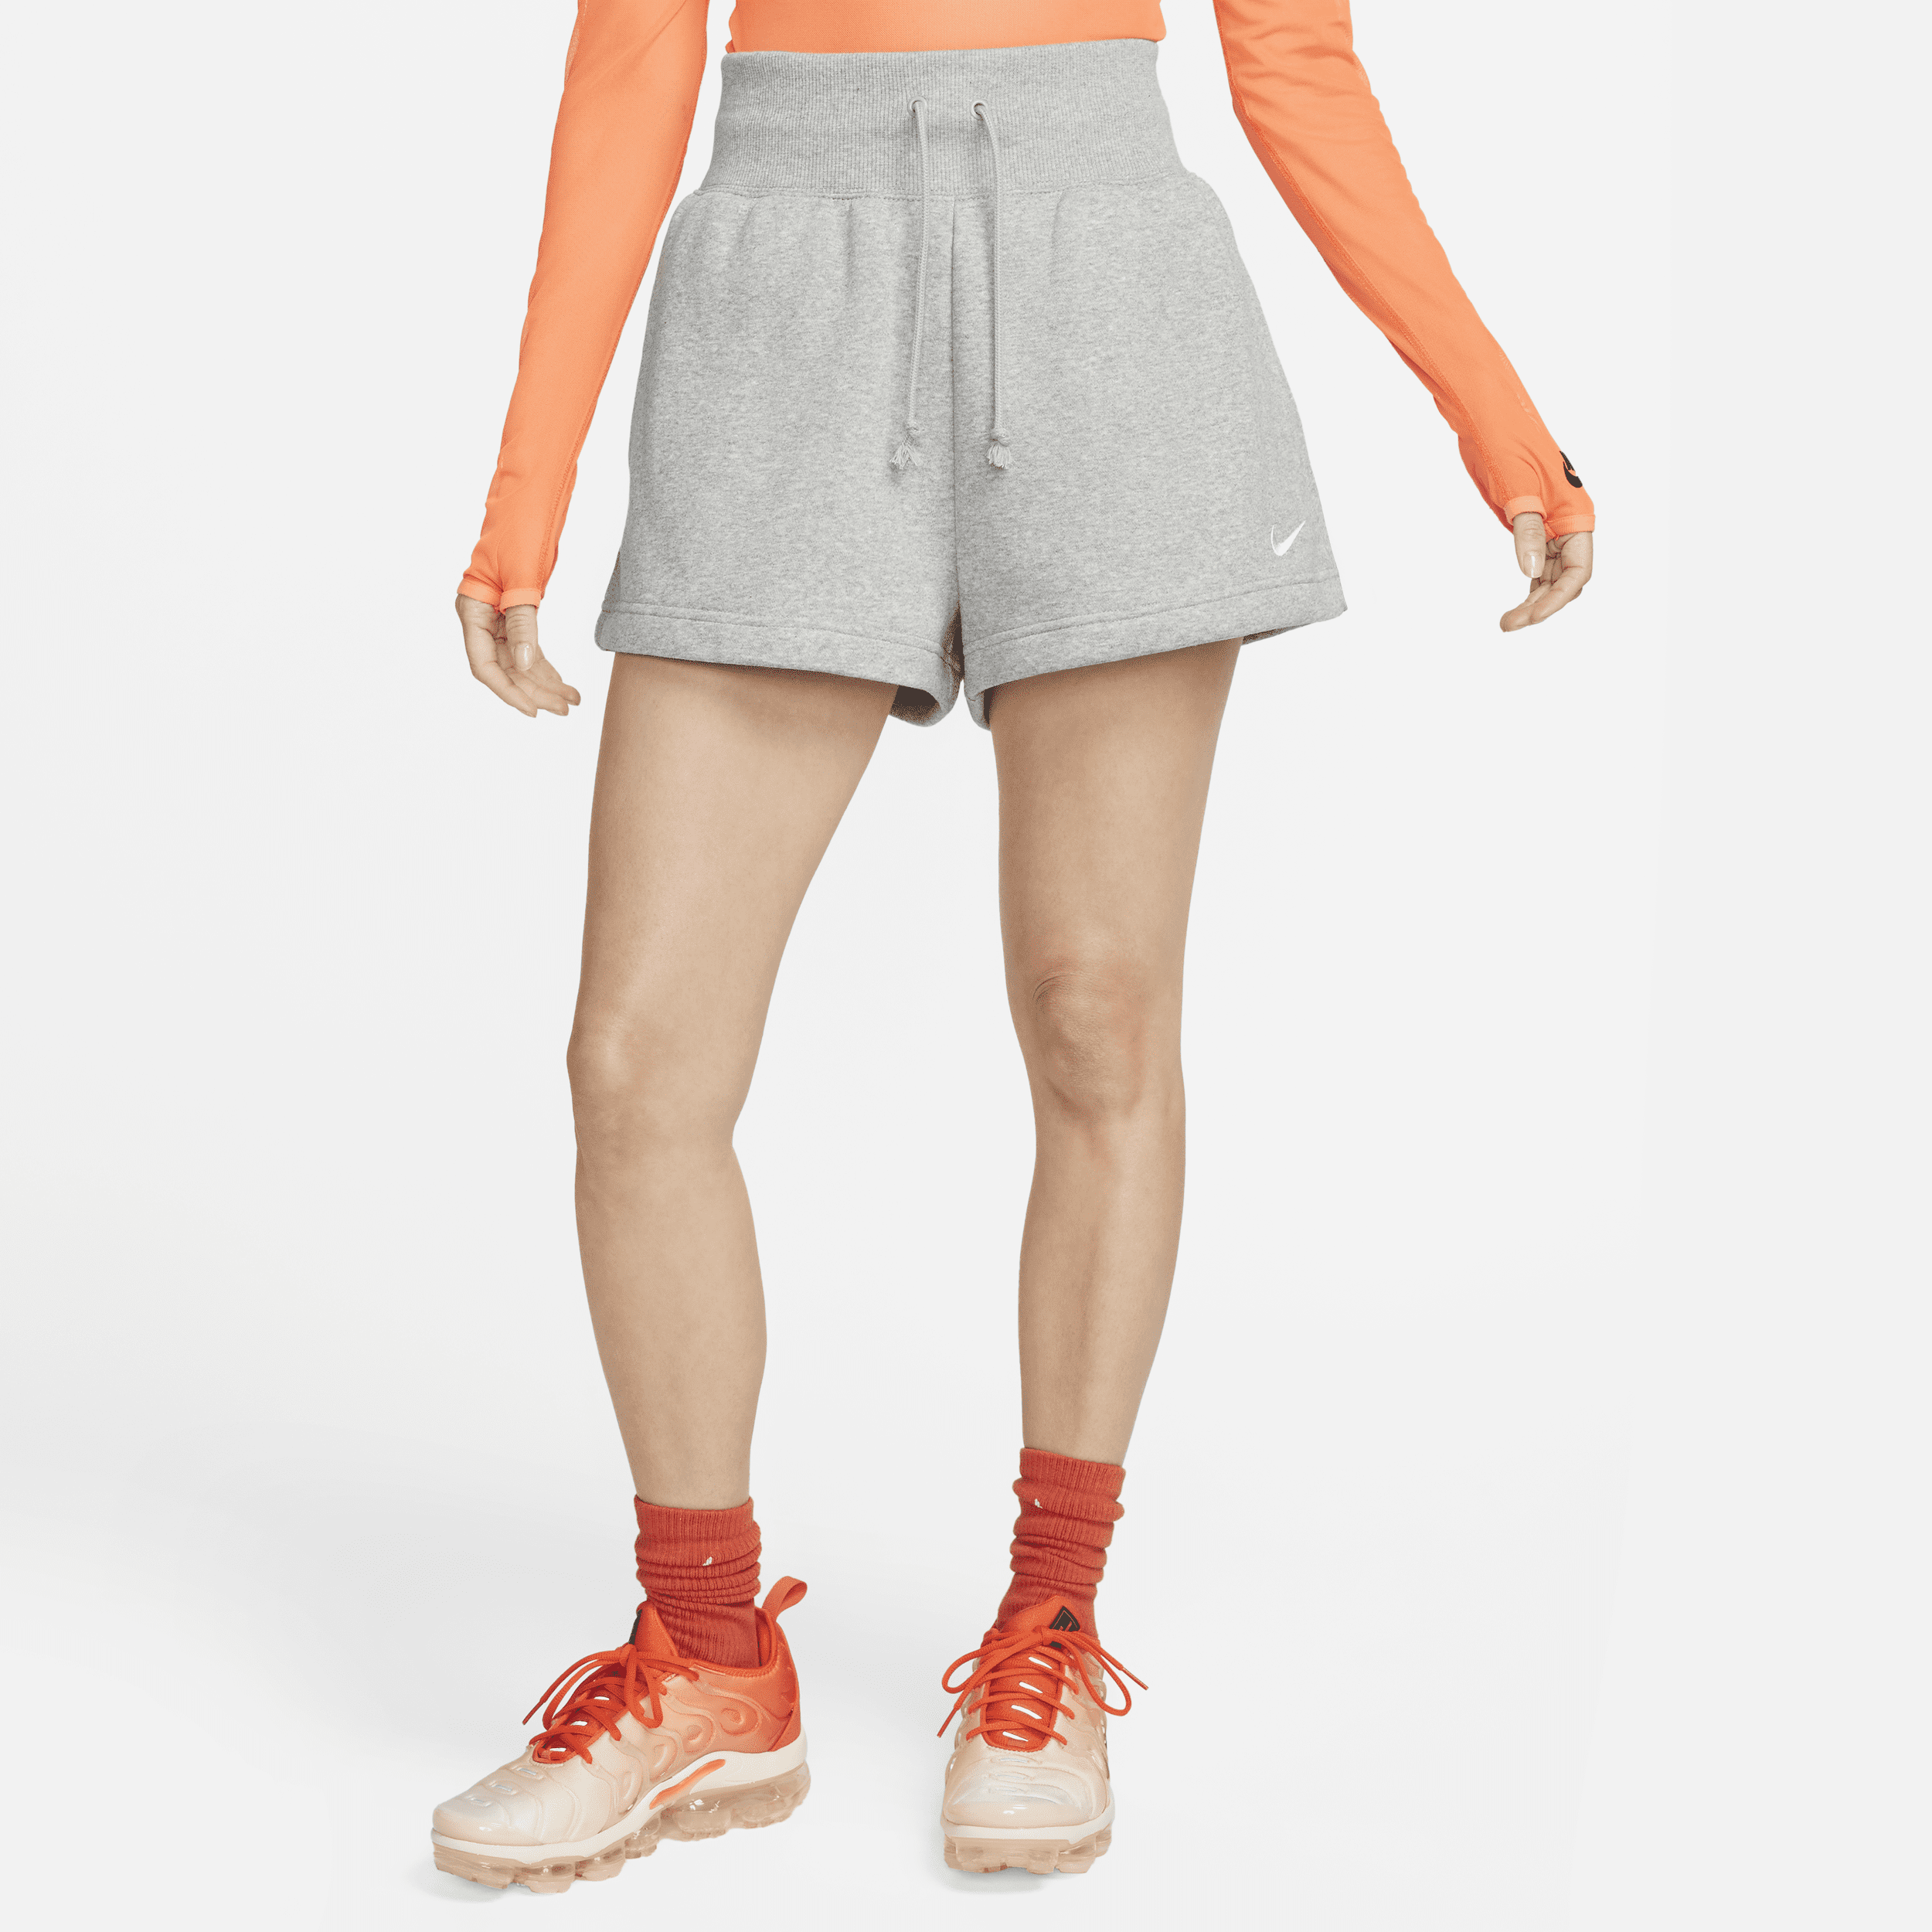 Shorts dal fit ampio a vita alta Nike Sportswear Phoenix Fleece – Donna - Grigio